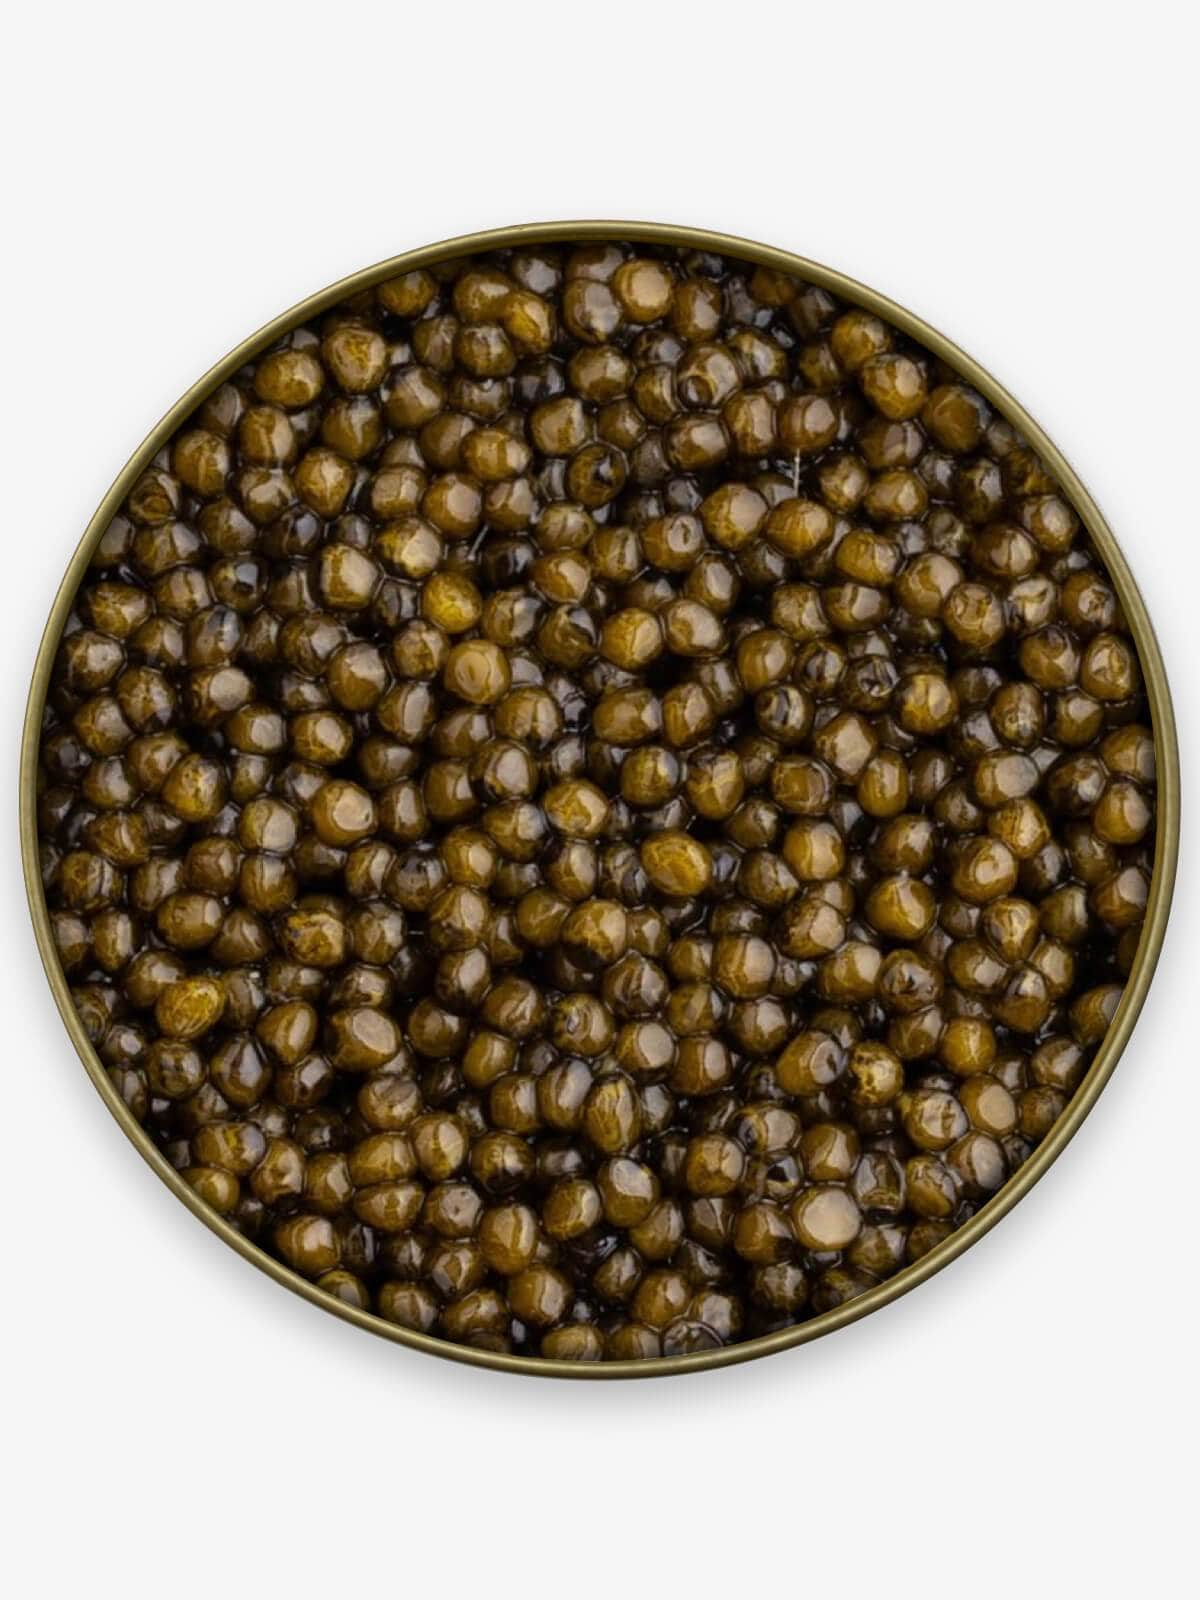 Kaluga Sturgeon Caviar - Golden “HUSO” (River Beluga) - Caviar Skazka